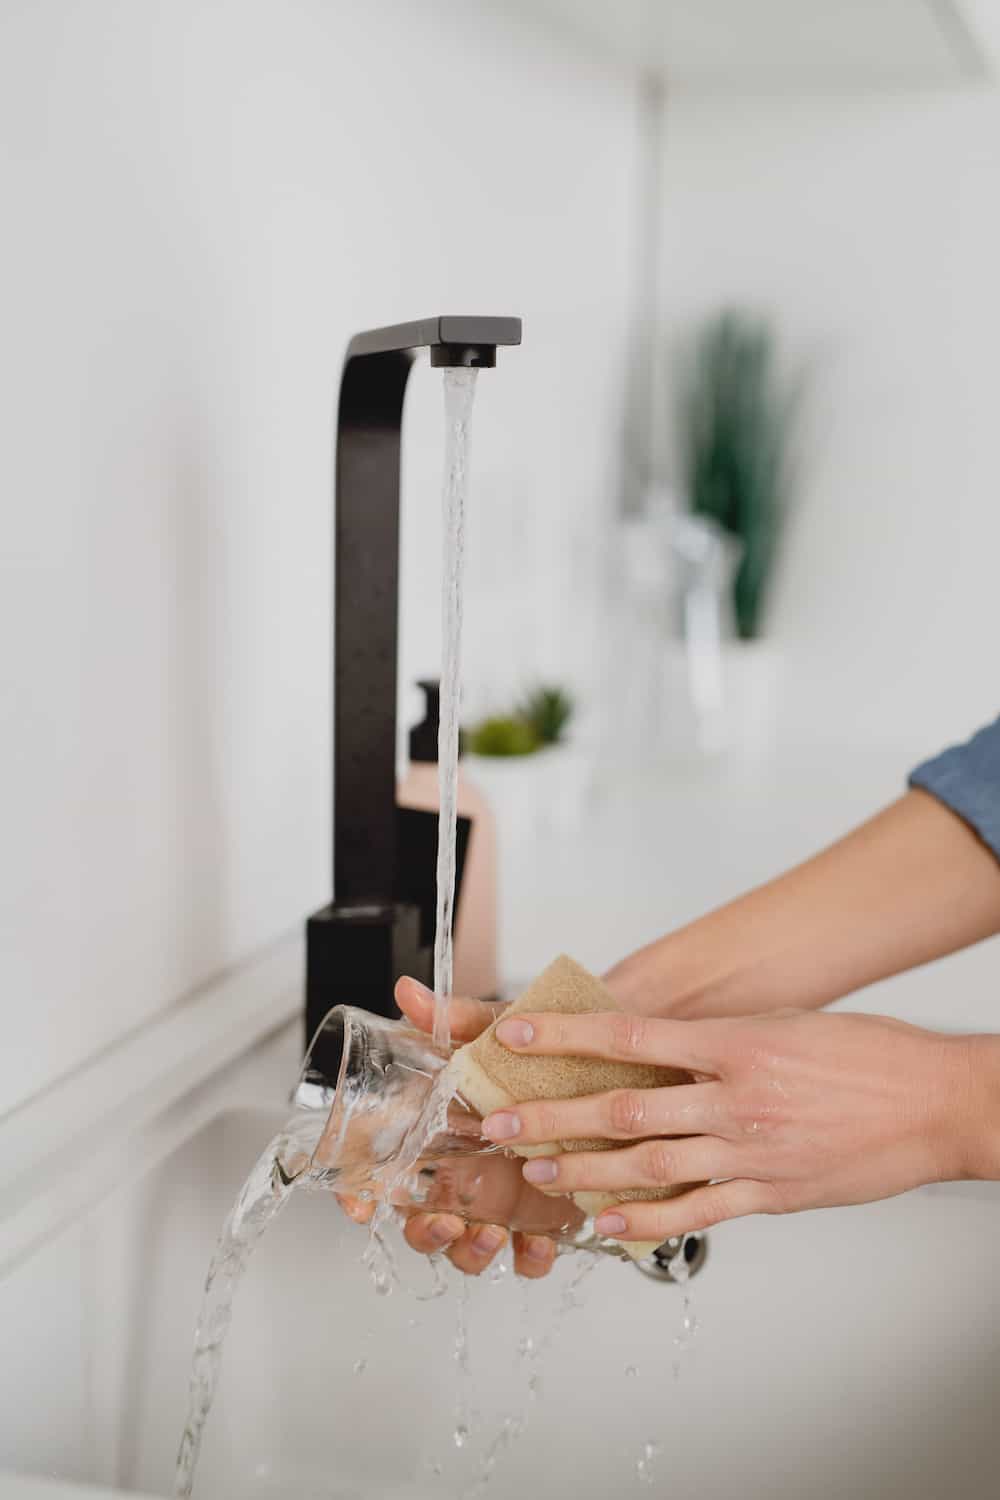 https://singlegirlsdiy.com/wp-content/uploads/2021/12/woman-washing-dishes-by-hand-in-sink.jpeg